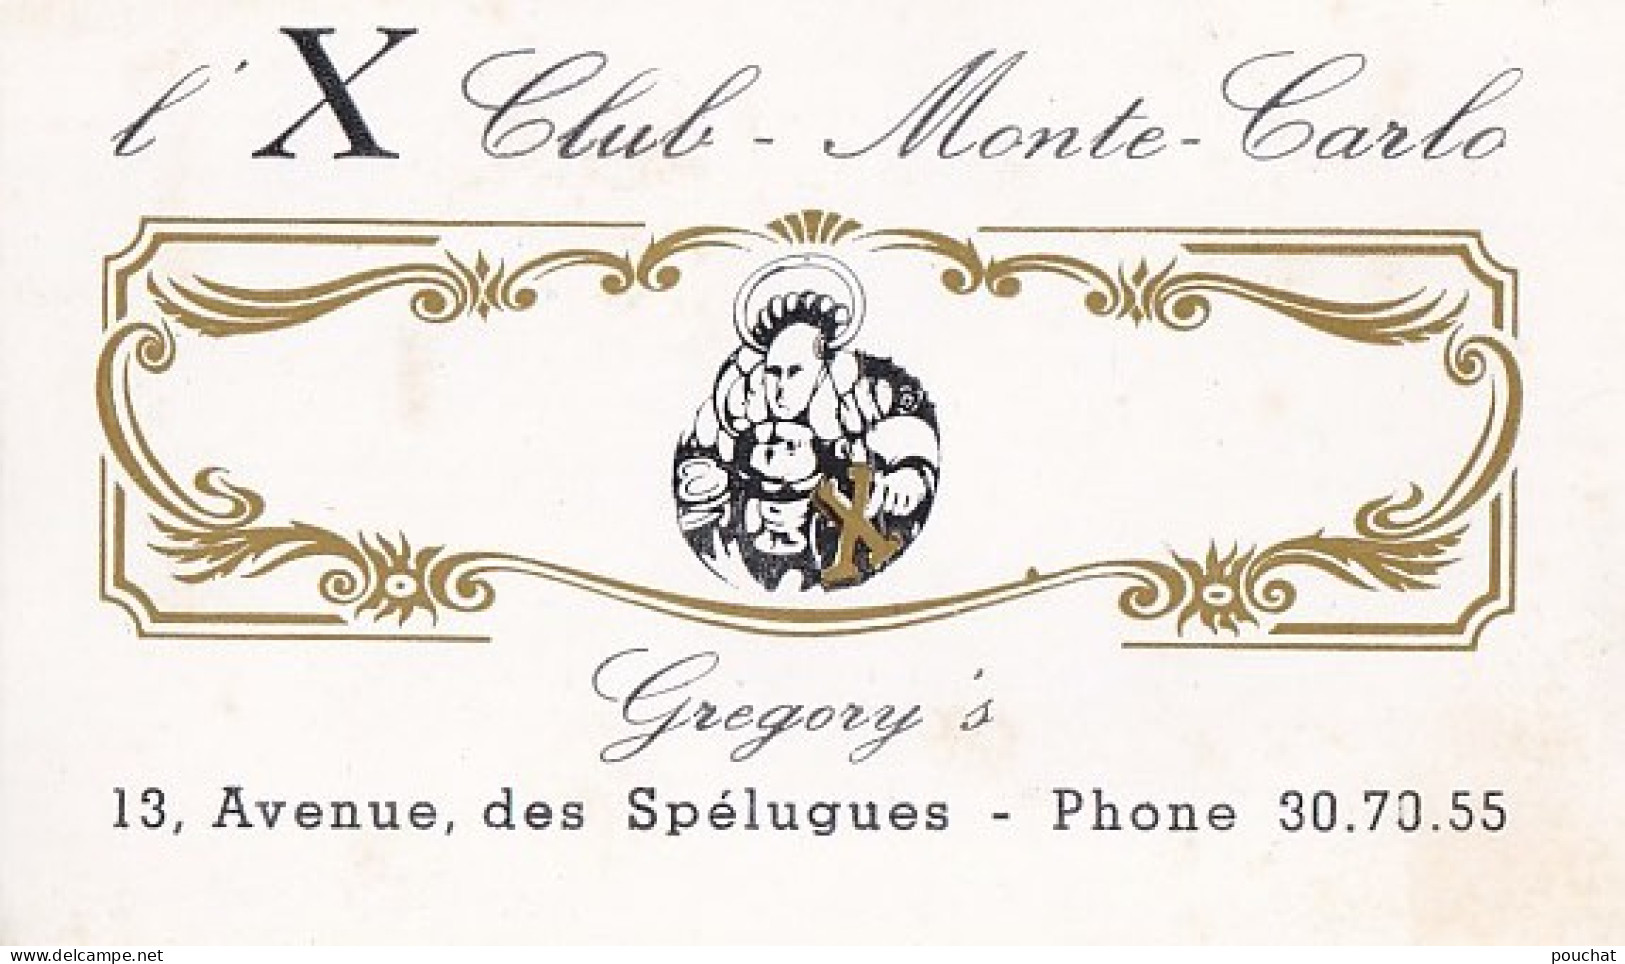 AA+ 127- " X " CLUB , MONTE CARLO - GREGORY'S , AVENUE DES SPELUGUES - CARTE DE VISITE - Visiting Cards